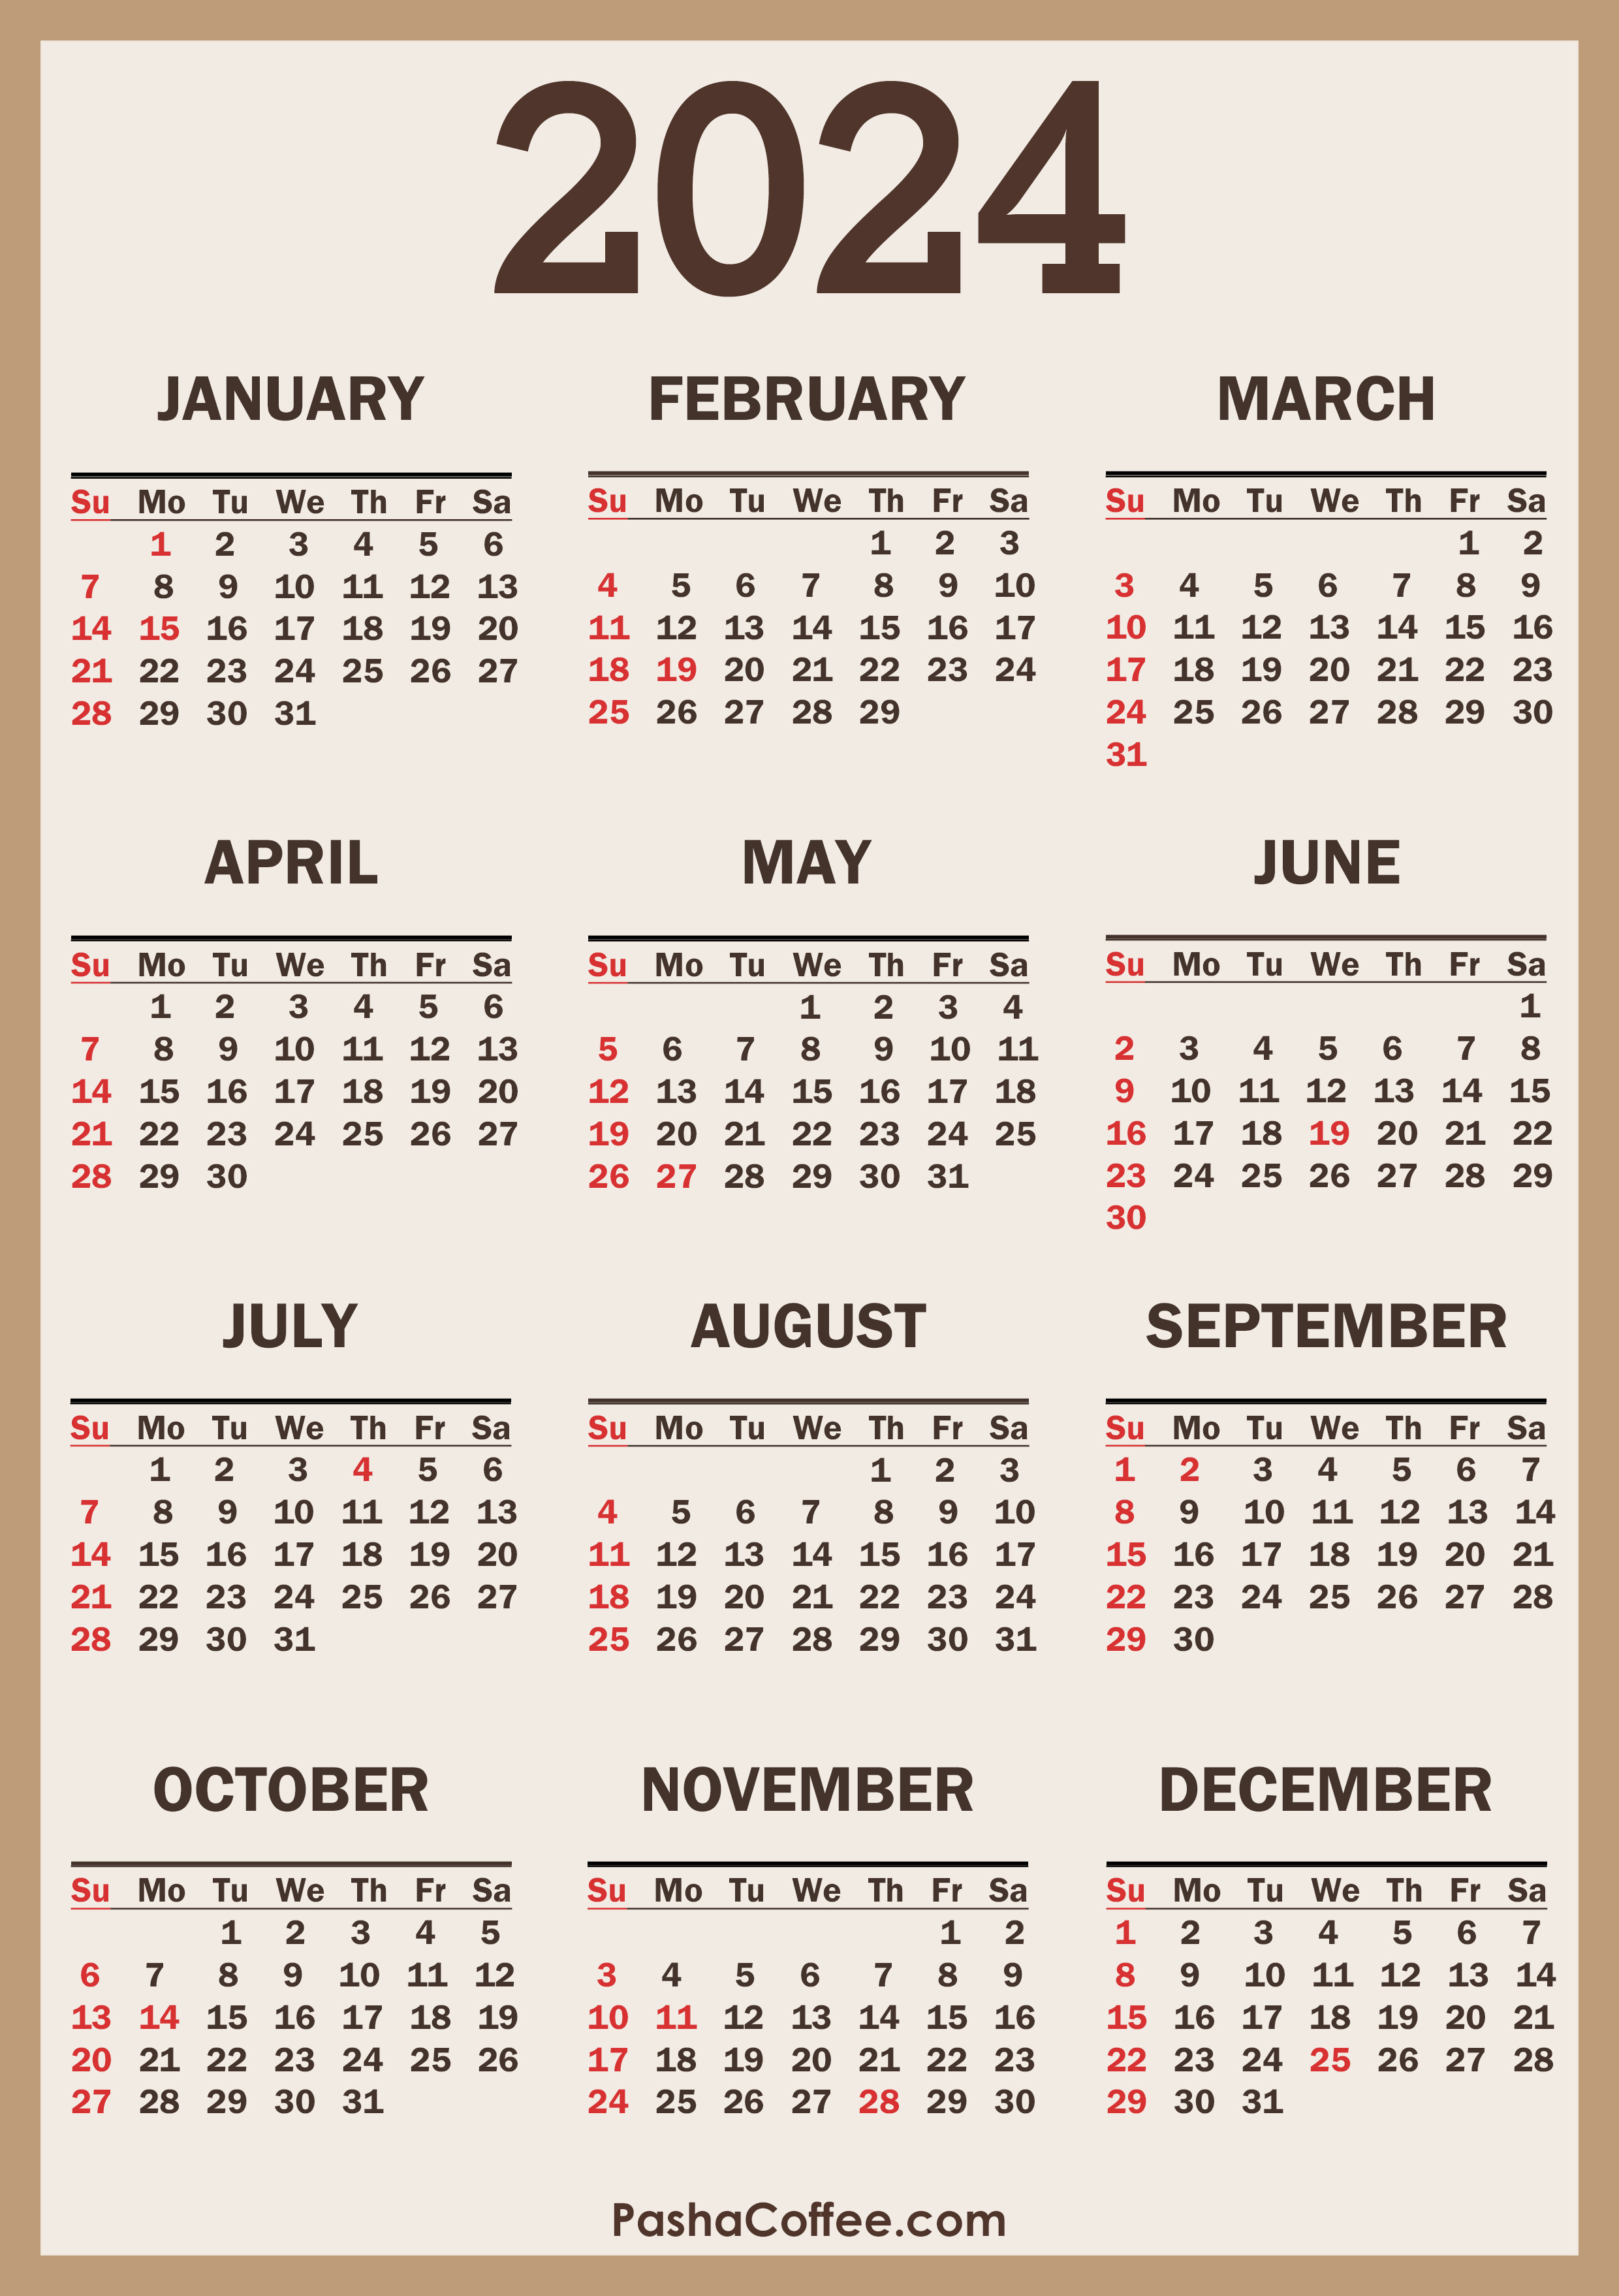 2024 Printable Calendar No Download Needed One January 2024 Calendar